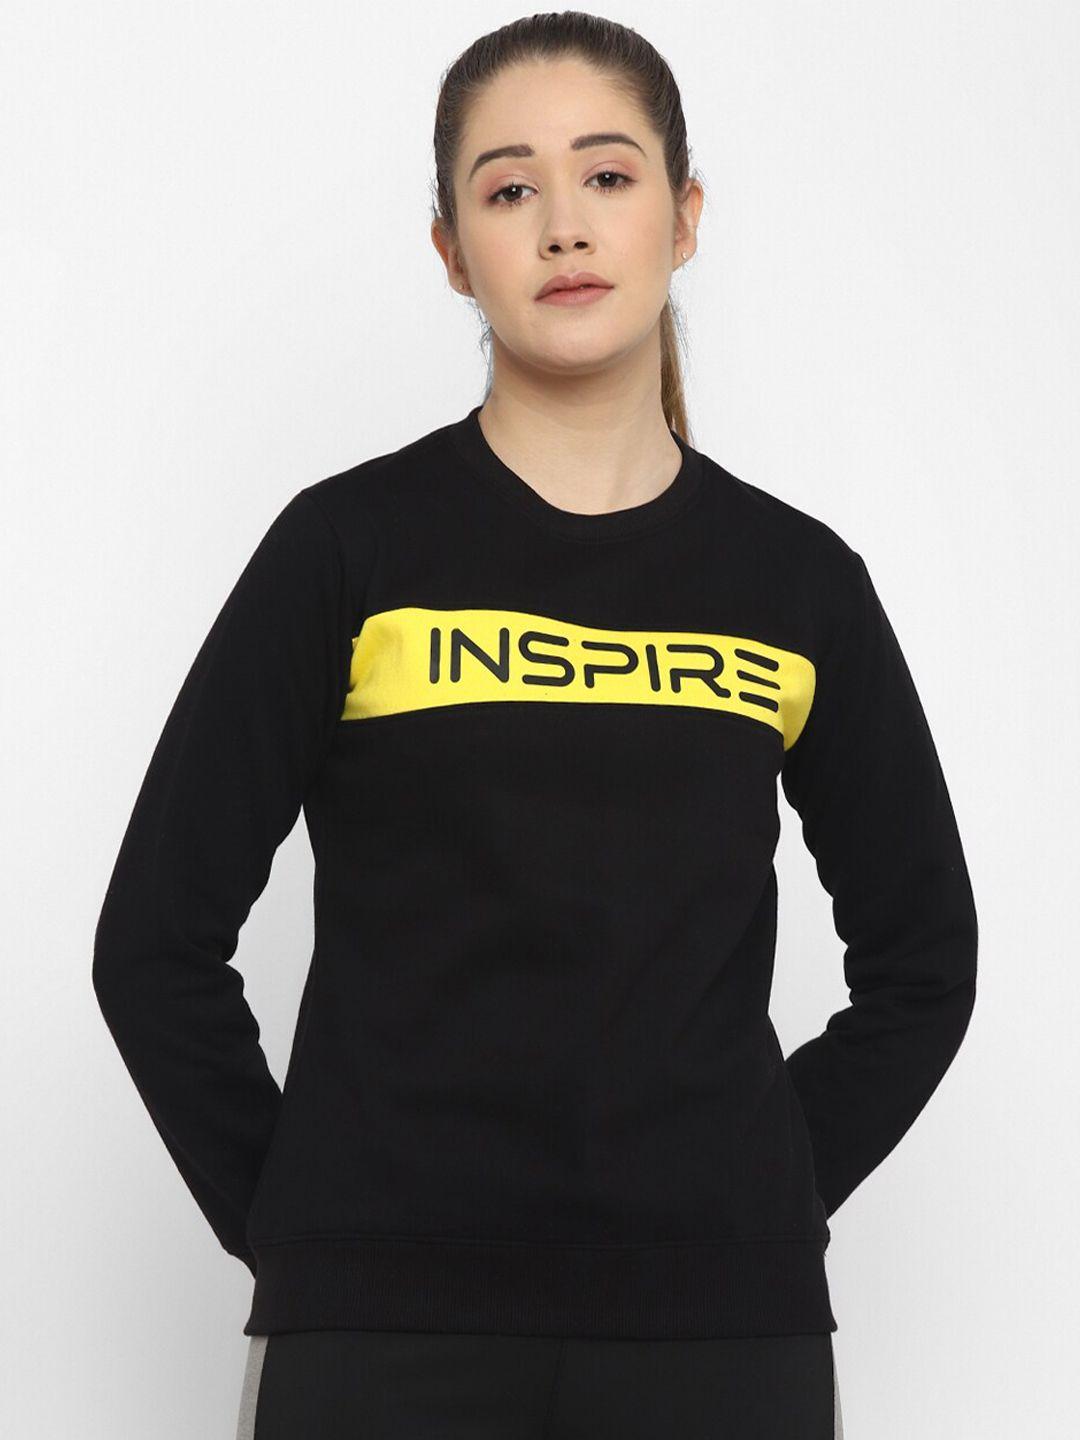 off limits women black printed sweatshirt